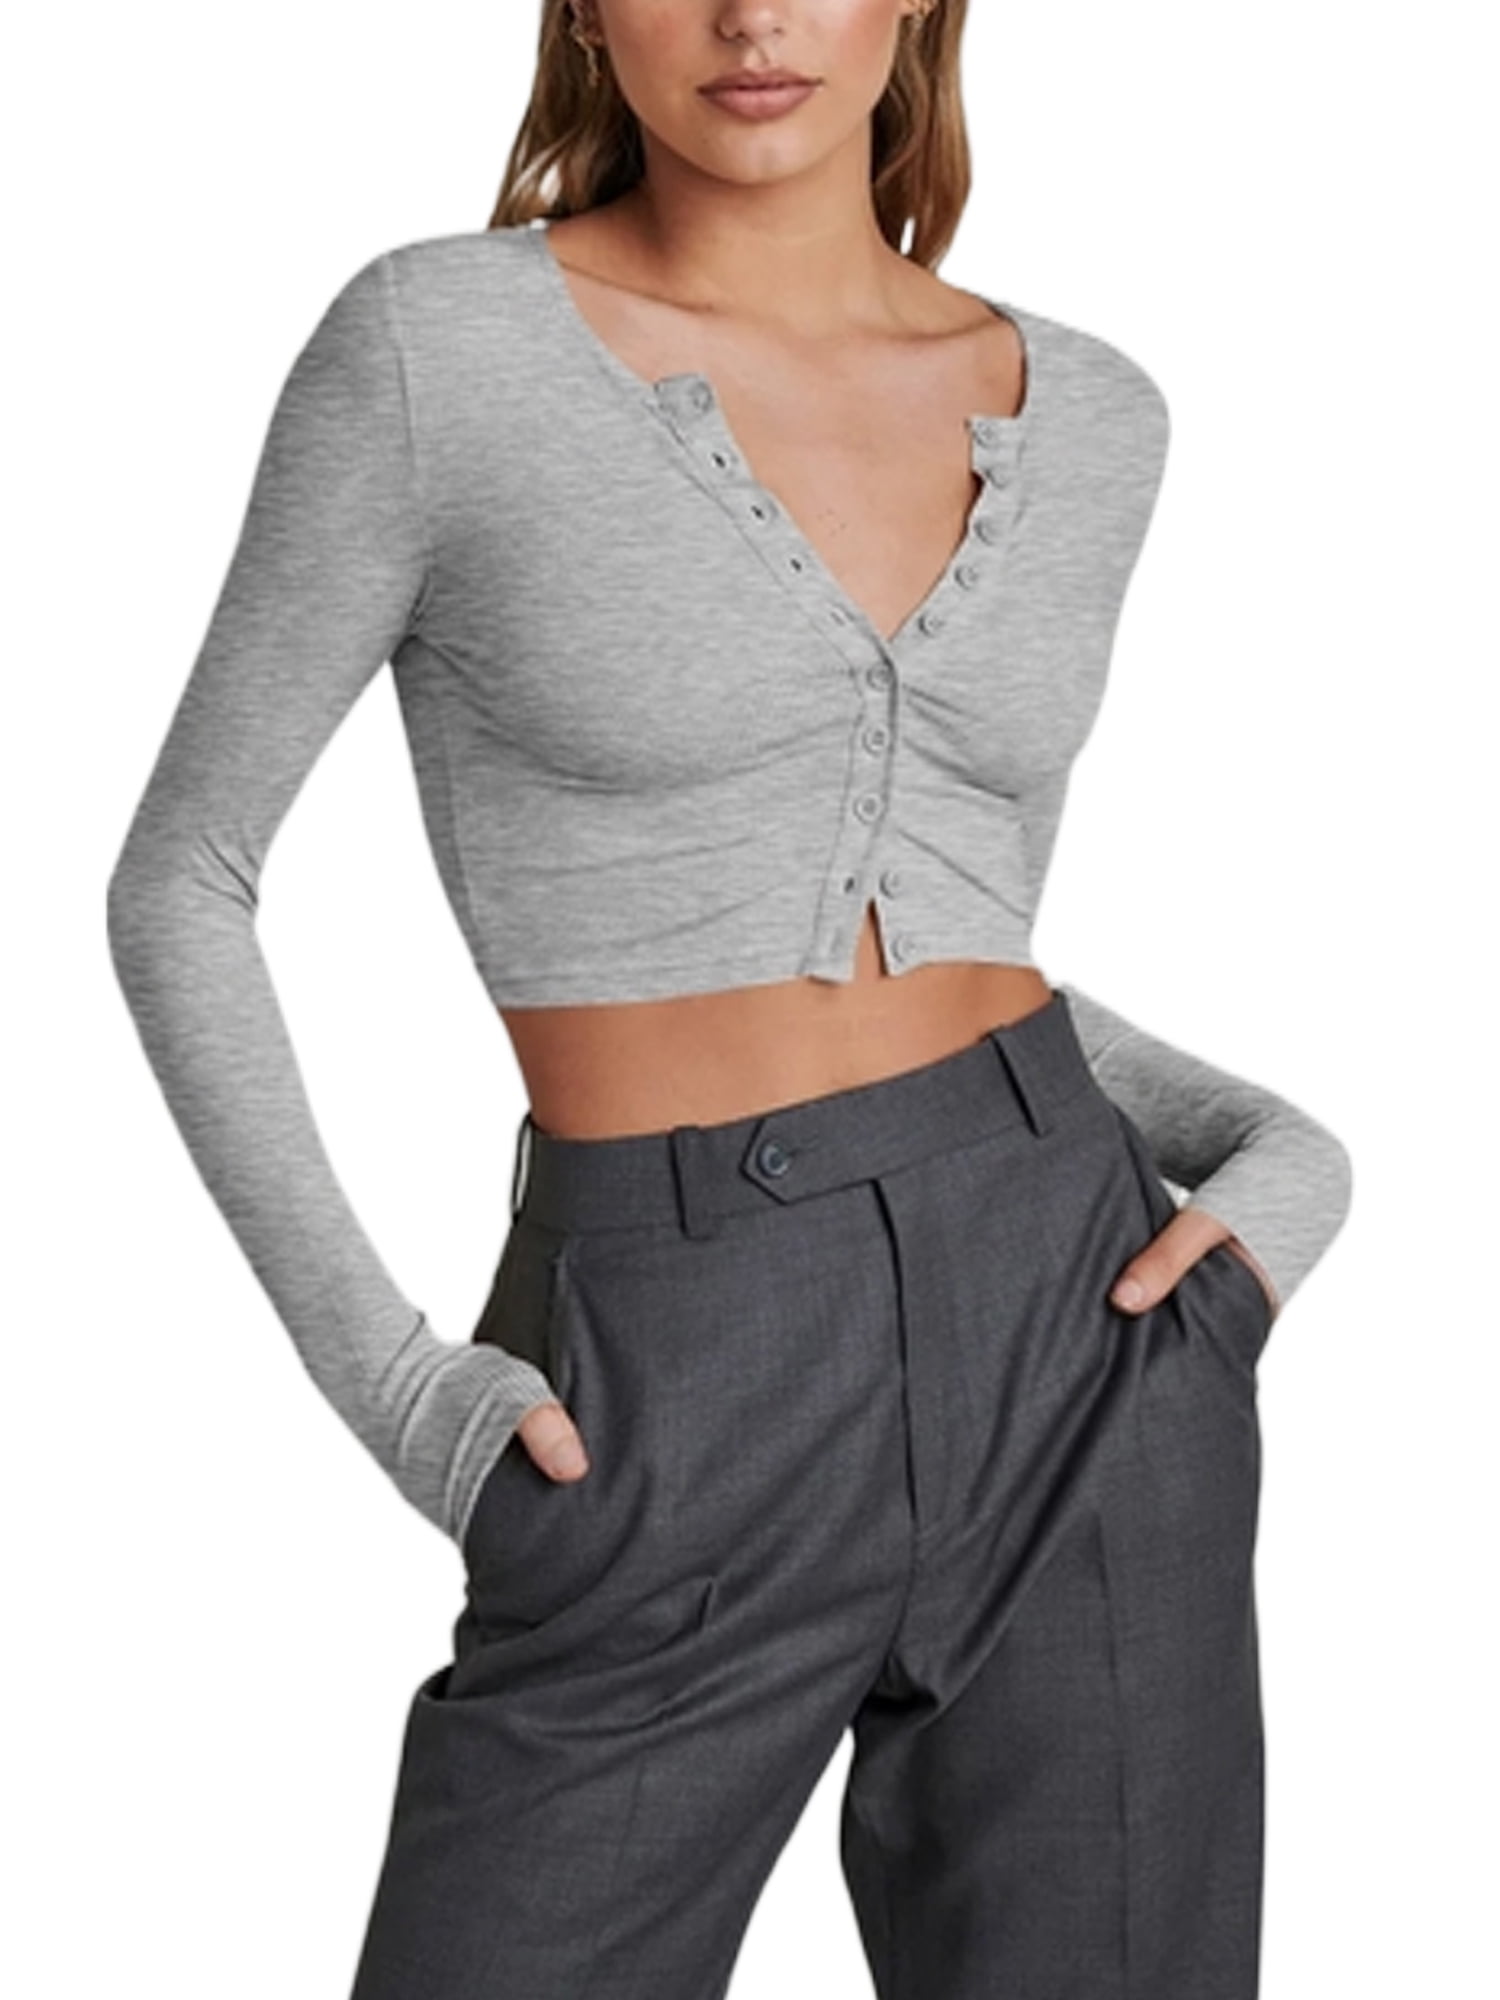 Long Sleeve Crop Top for Women Button Slim Fit Tee Shirt Scoop